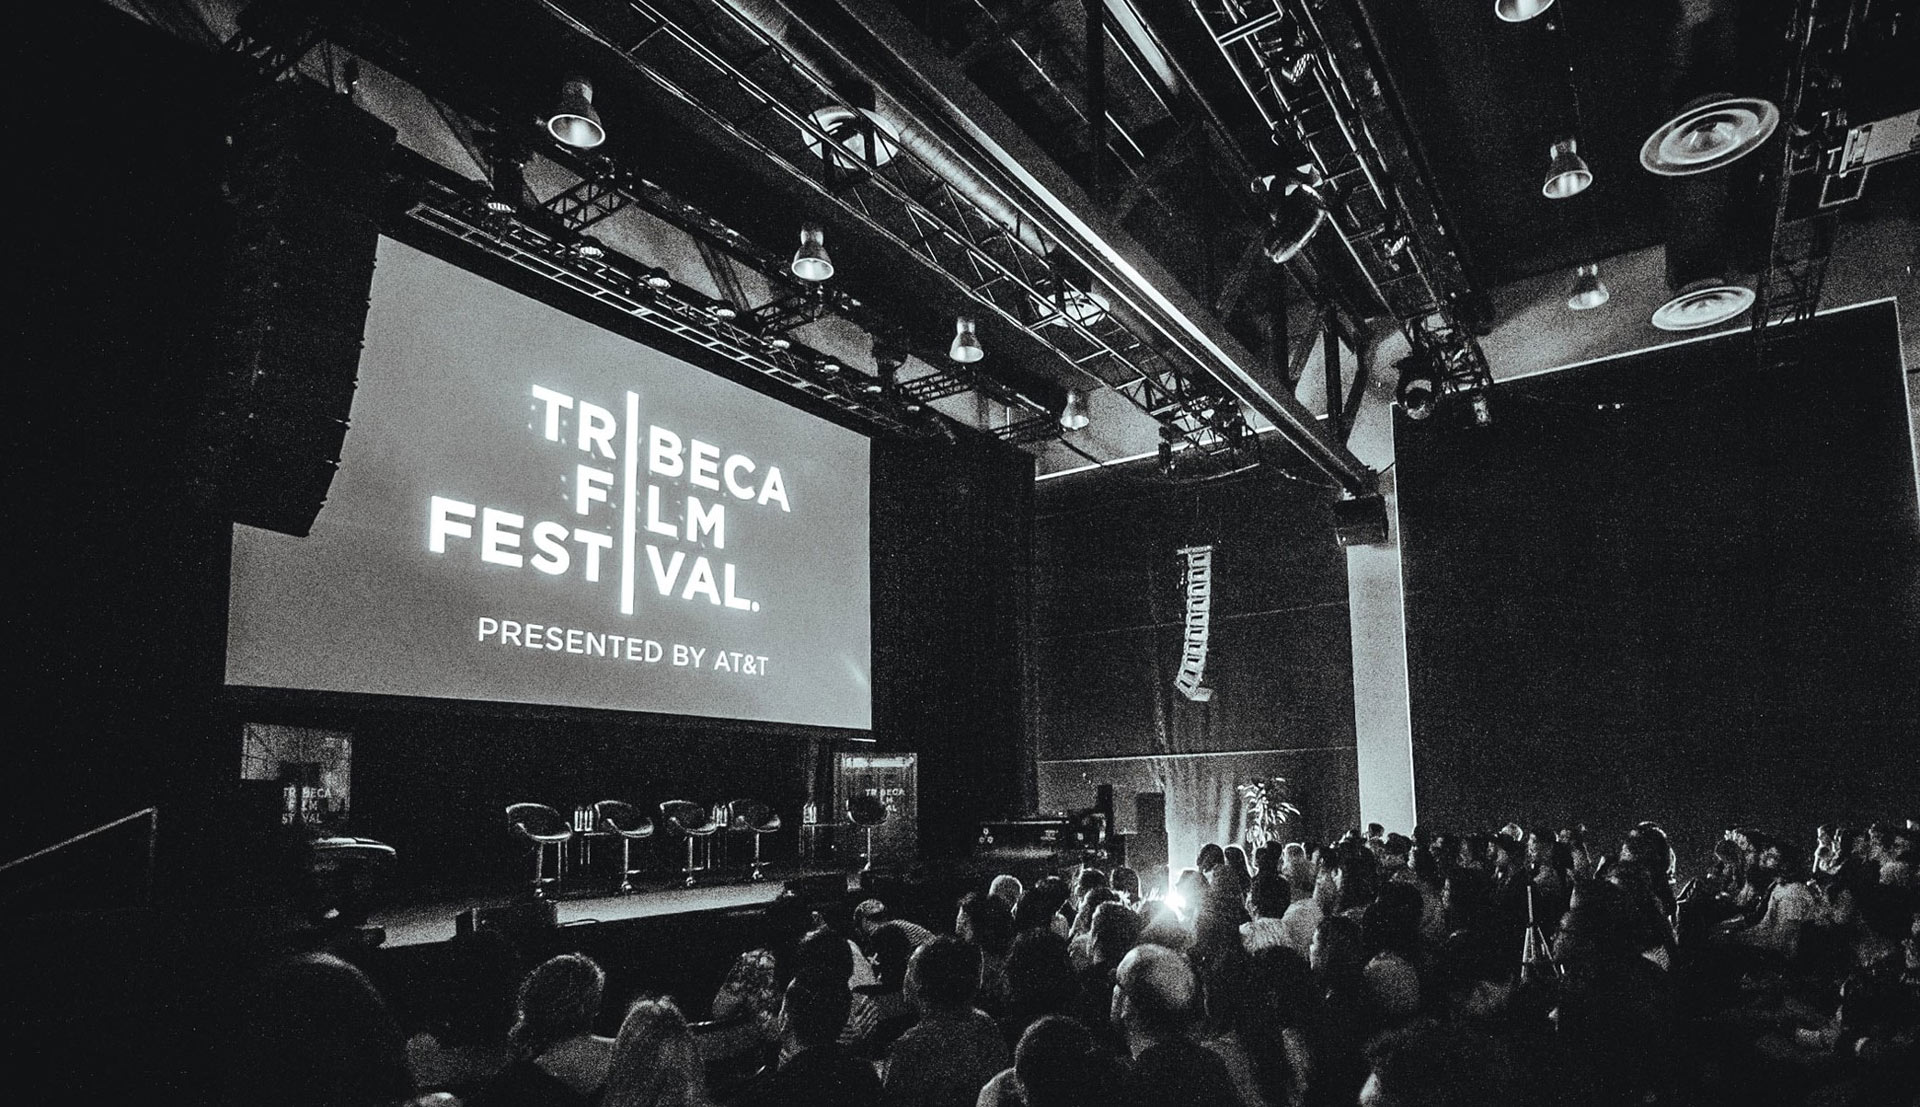 tibreca-film-festival.jpg